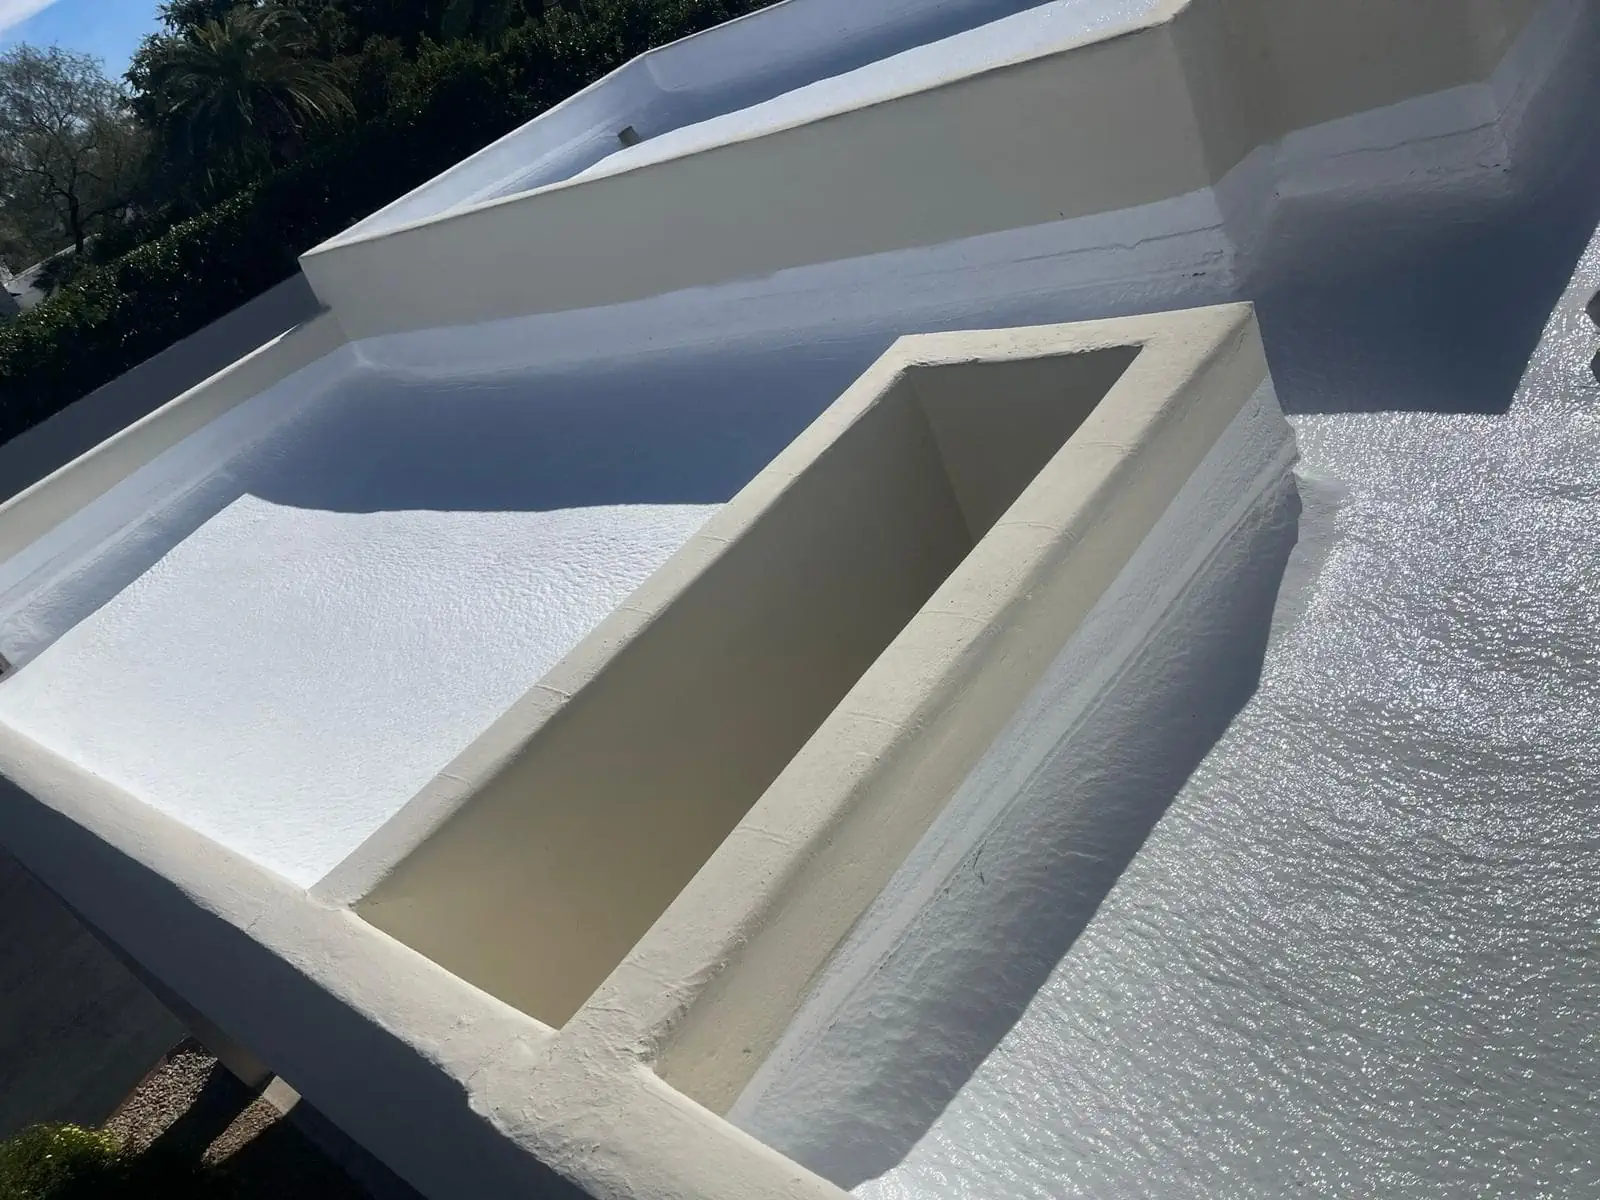 spray polyurethane roof coating in scottsdale az